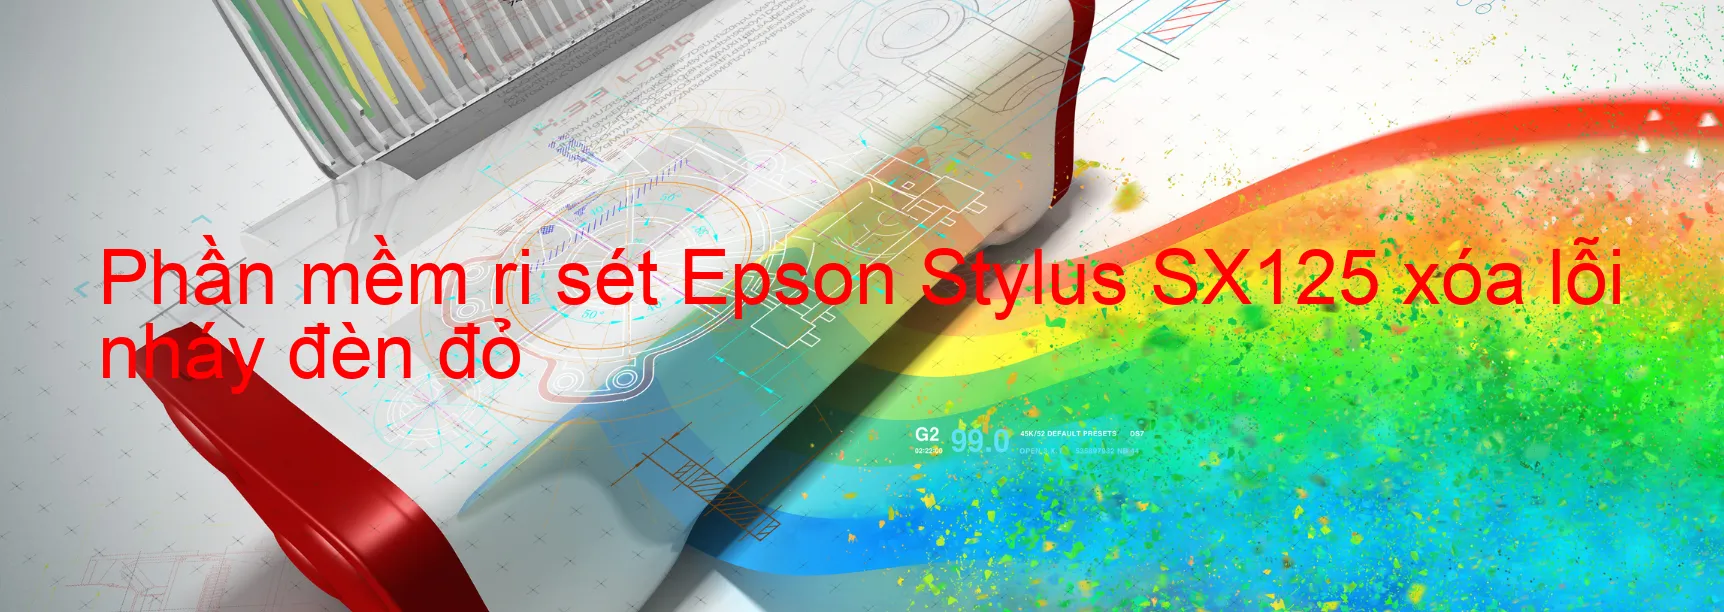 Phần mềm reset Epson Stylus SX125 xóa lỗi nháy đèn đỏ